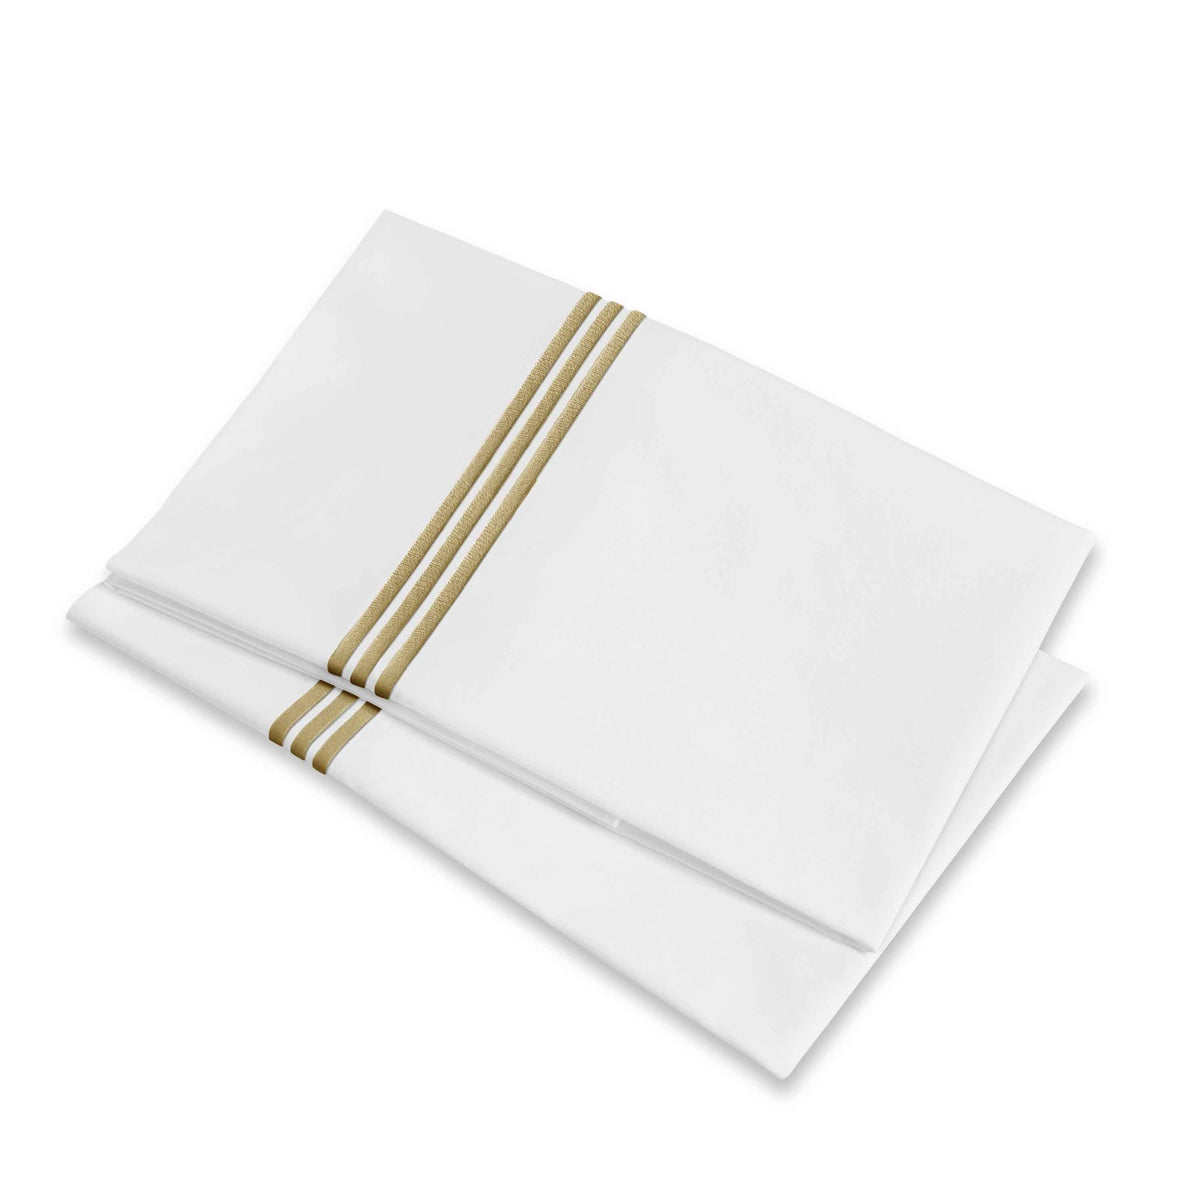 Folded Pillowcases of Signoria Platinum Percale Bedding in White/Coffee Color